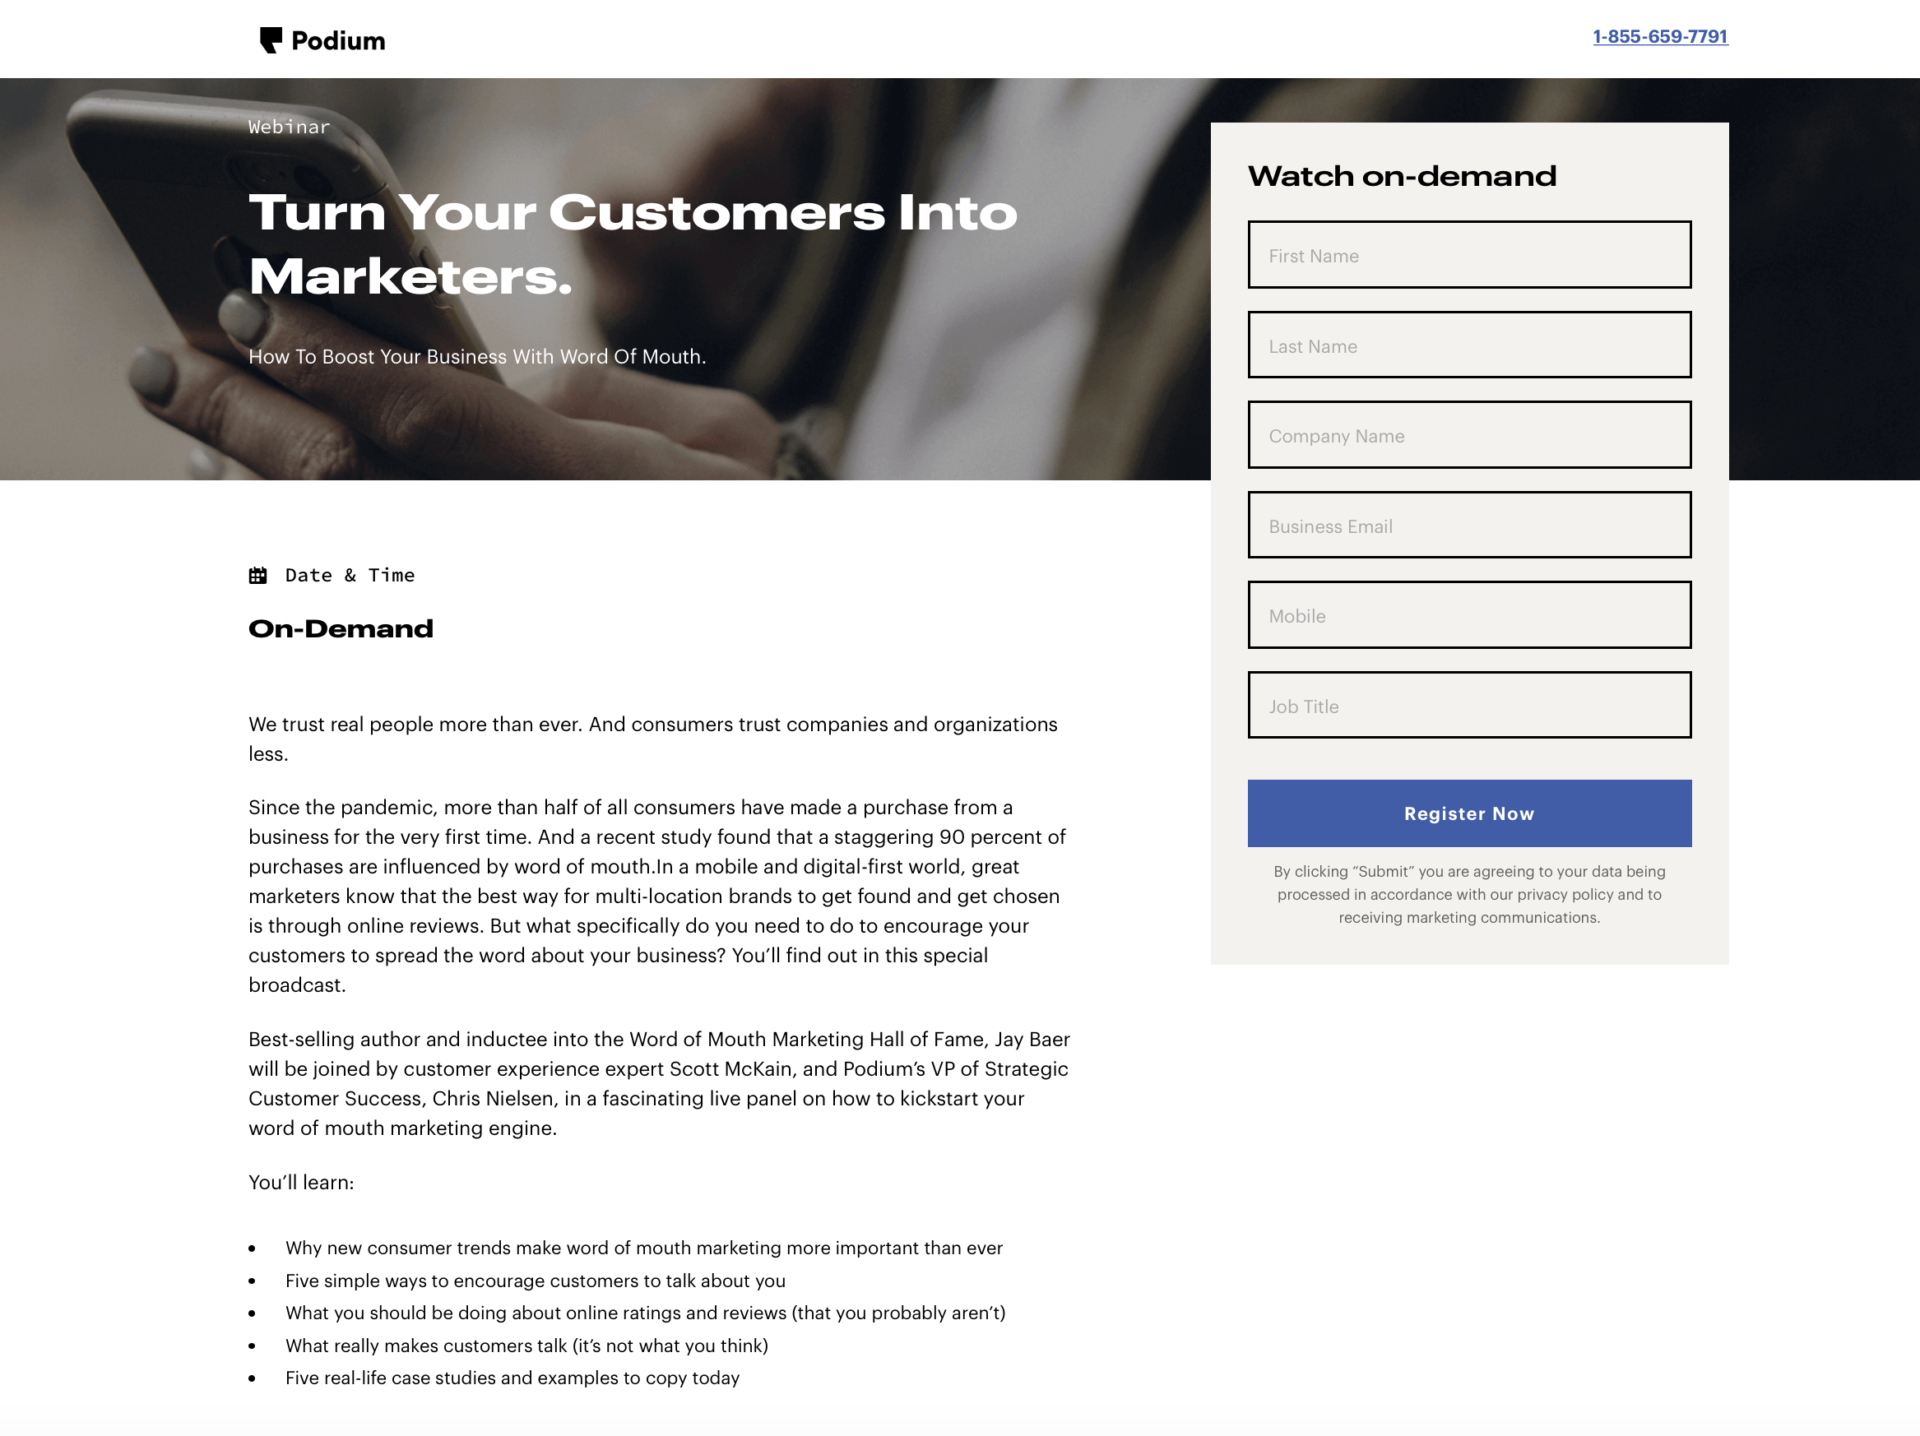 Content Marketing Example: Marketing Webinar with Podium